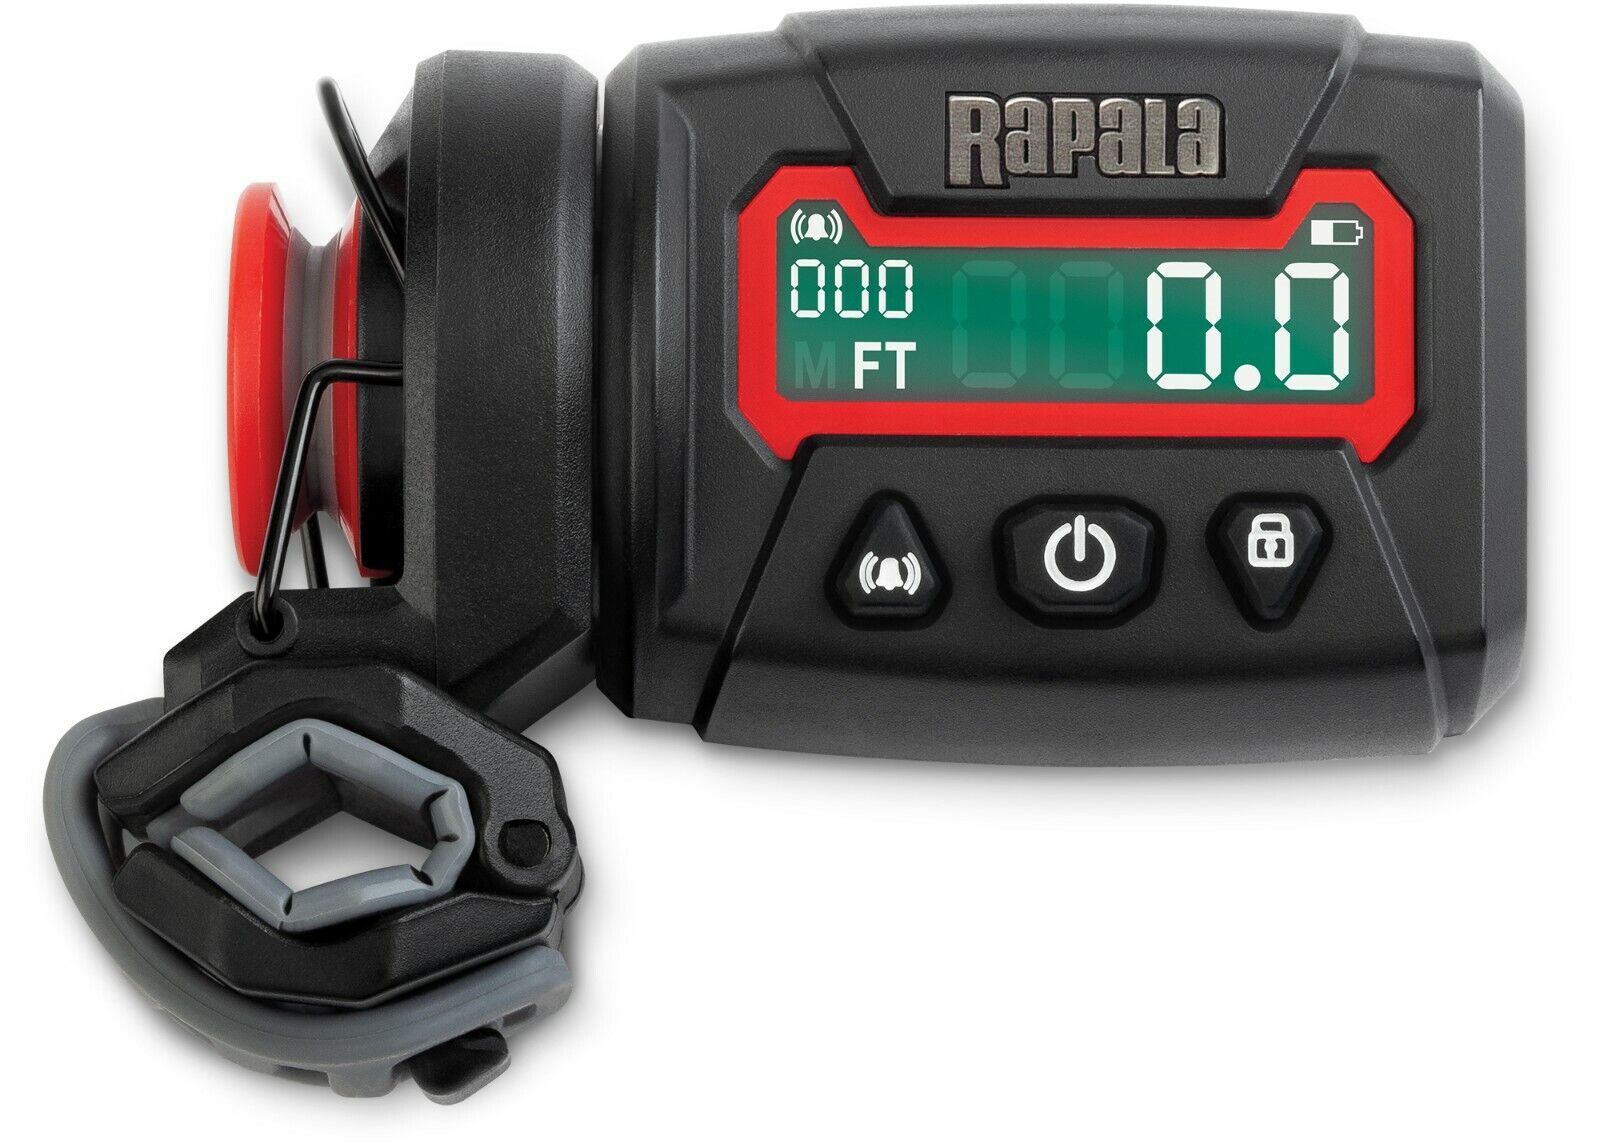 Rapala RDLC Digital Line Counter, Digital Display w/Backlight